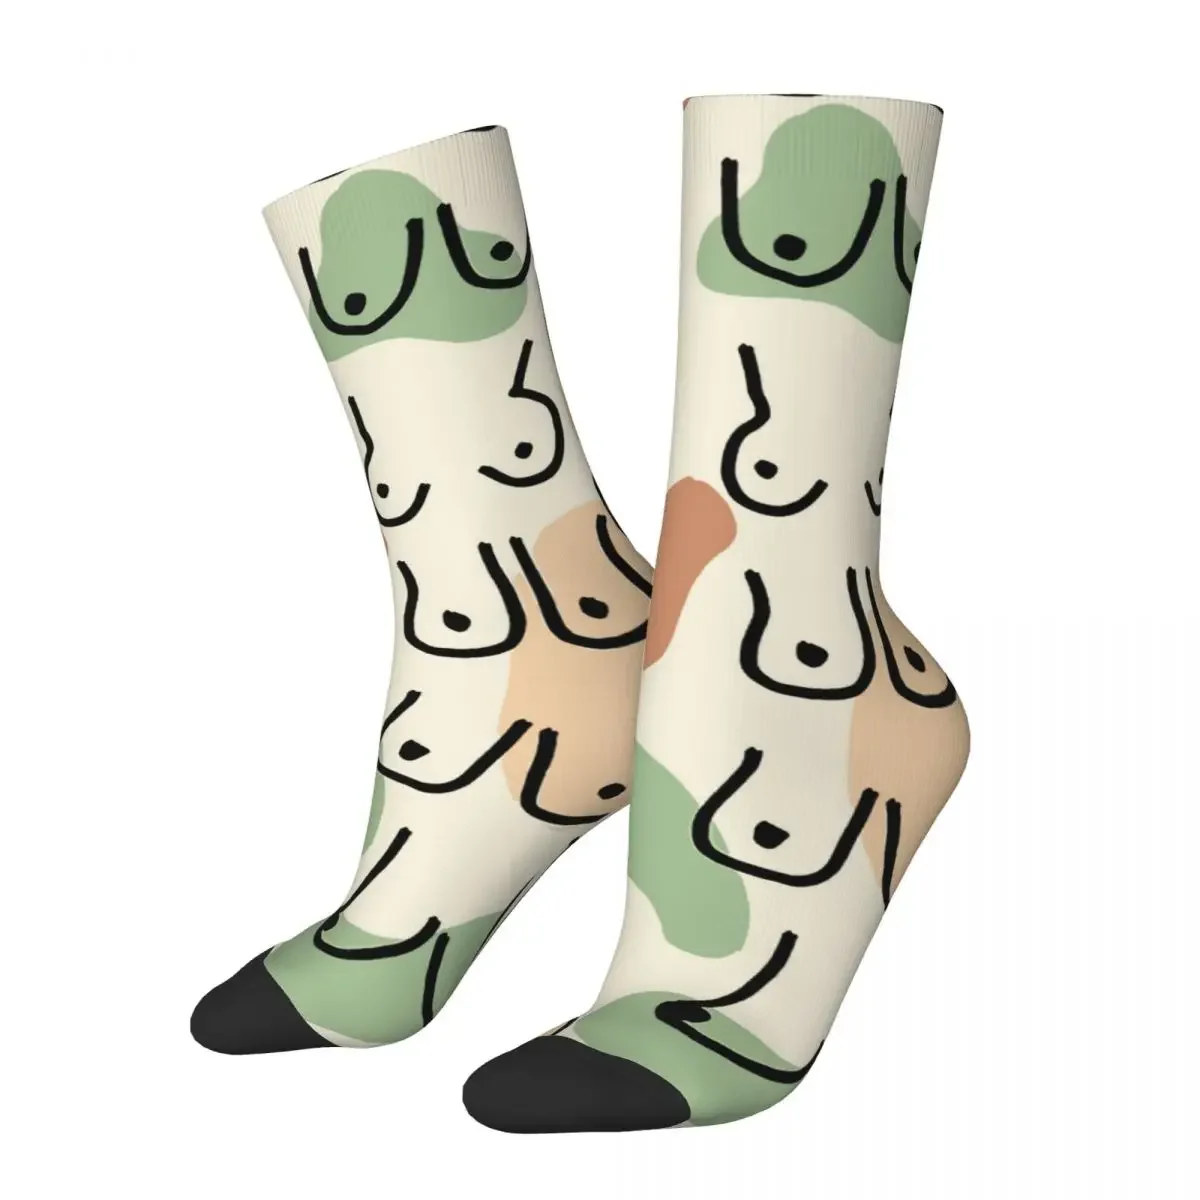 

Funny Crazy Sock for Men Midcentury Hip Hop Harajuku Boobs Seamless Pattern Printed Boys Crew Sock Novelty Gift